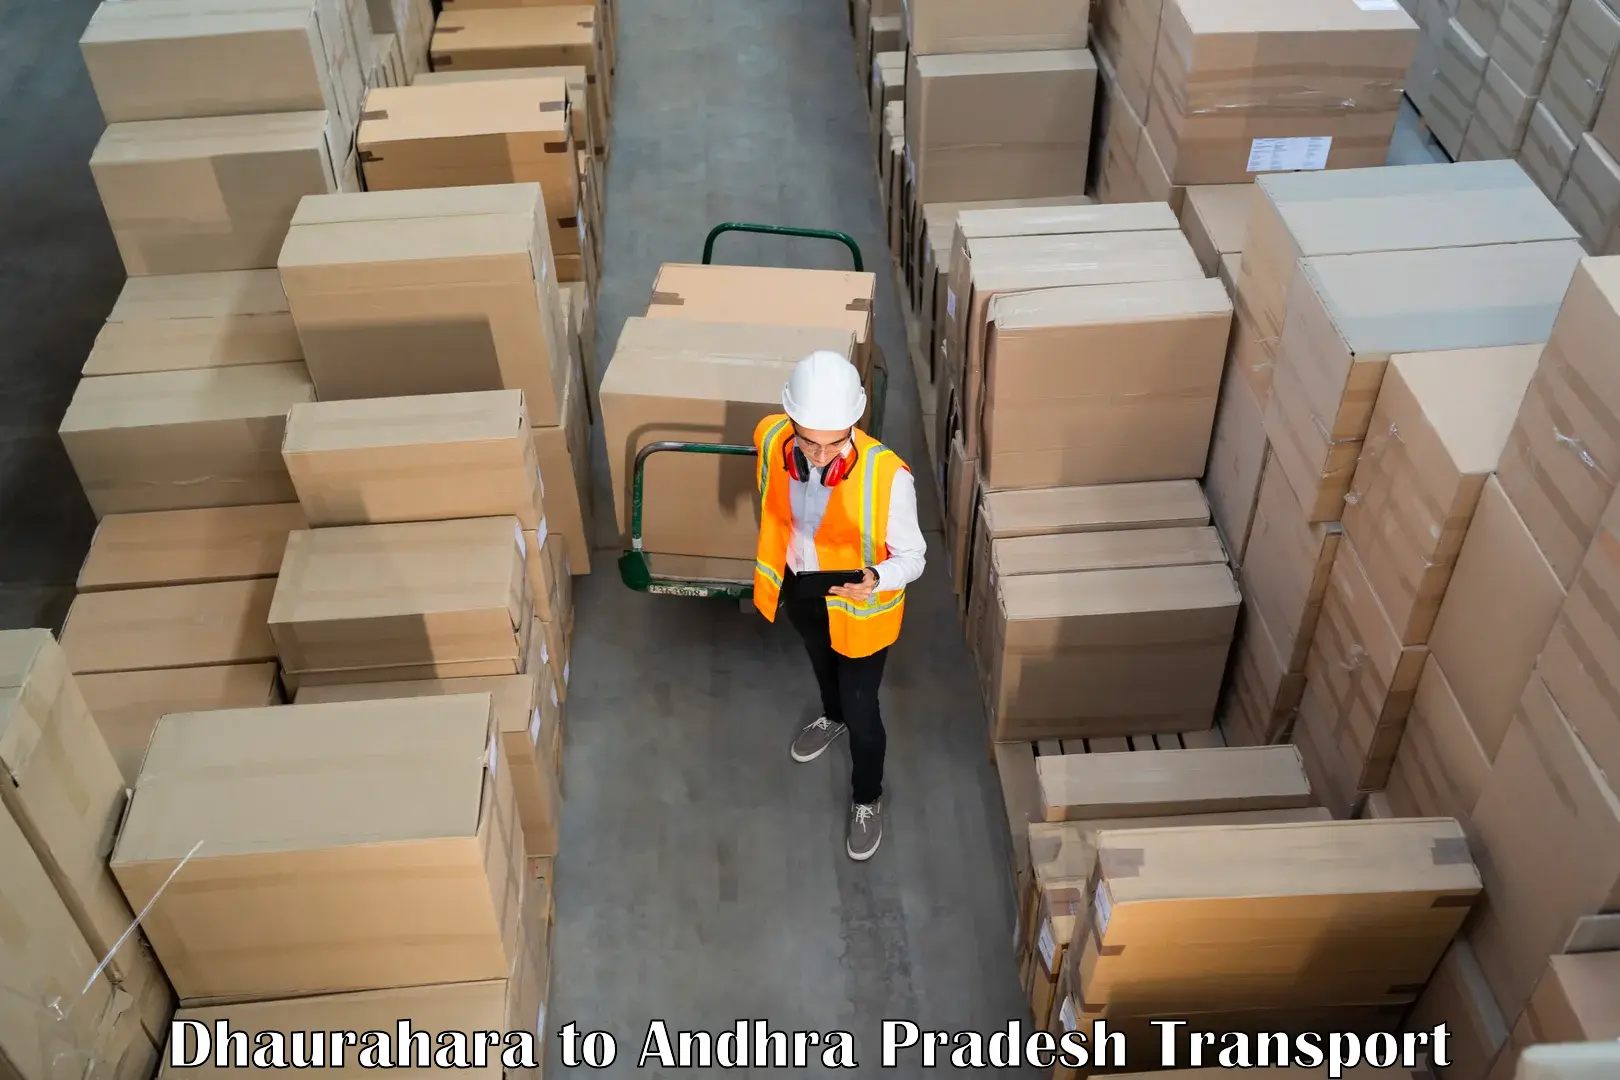 Delivery service Dhaurahara to Andhra Pradesh